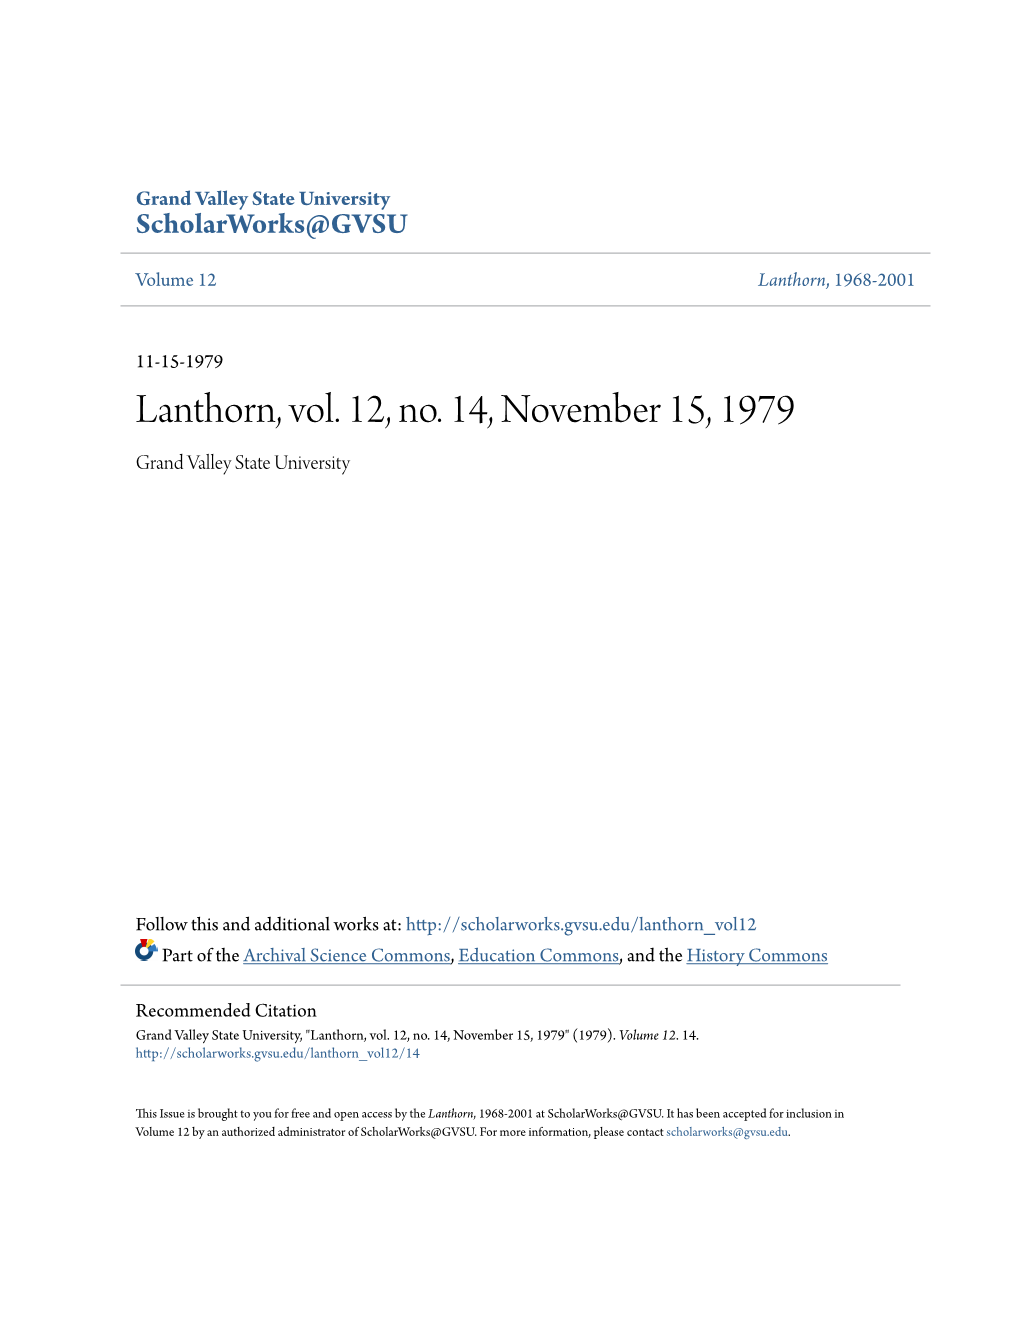 Lanthorn, Vol. 12, No. 14, November 15, 1979 Grand Valley State University